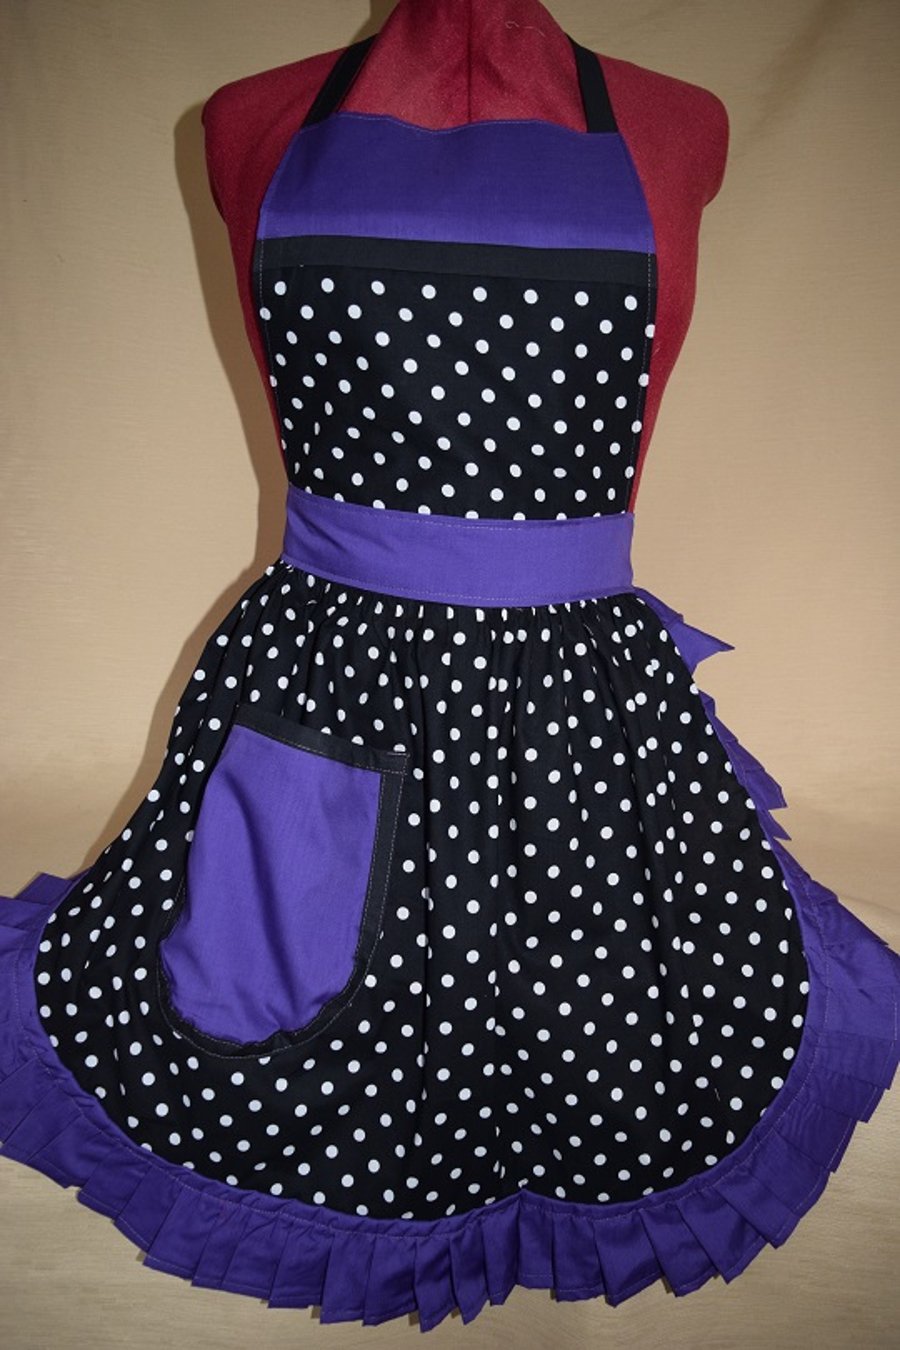 Vintage 50s Style Full Apron Pinny - Black & White Polka Dot with Purple Trim